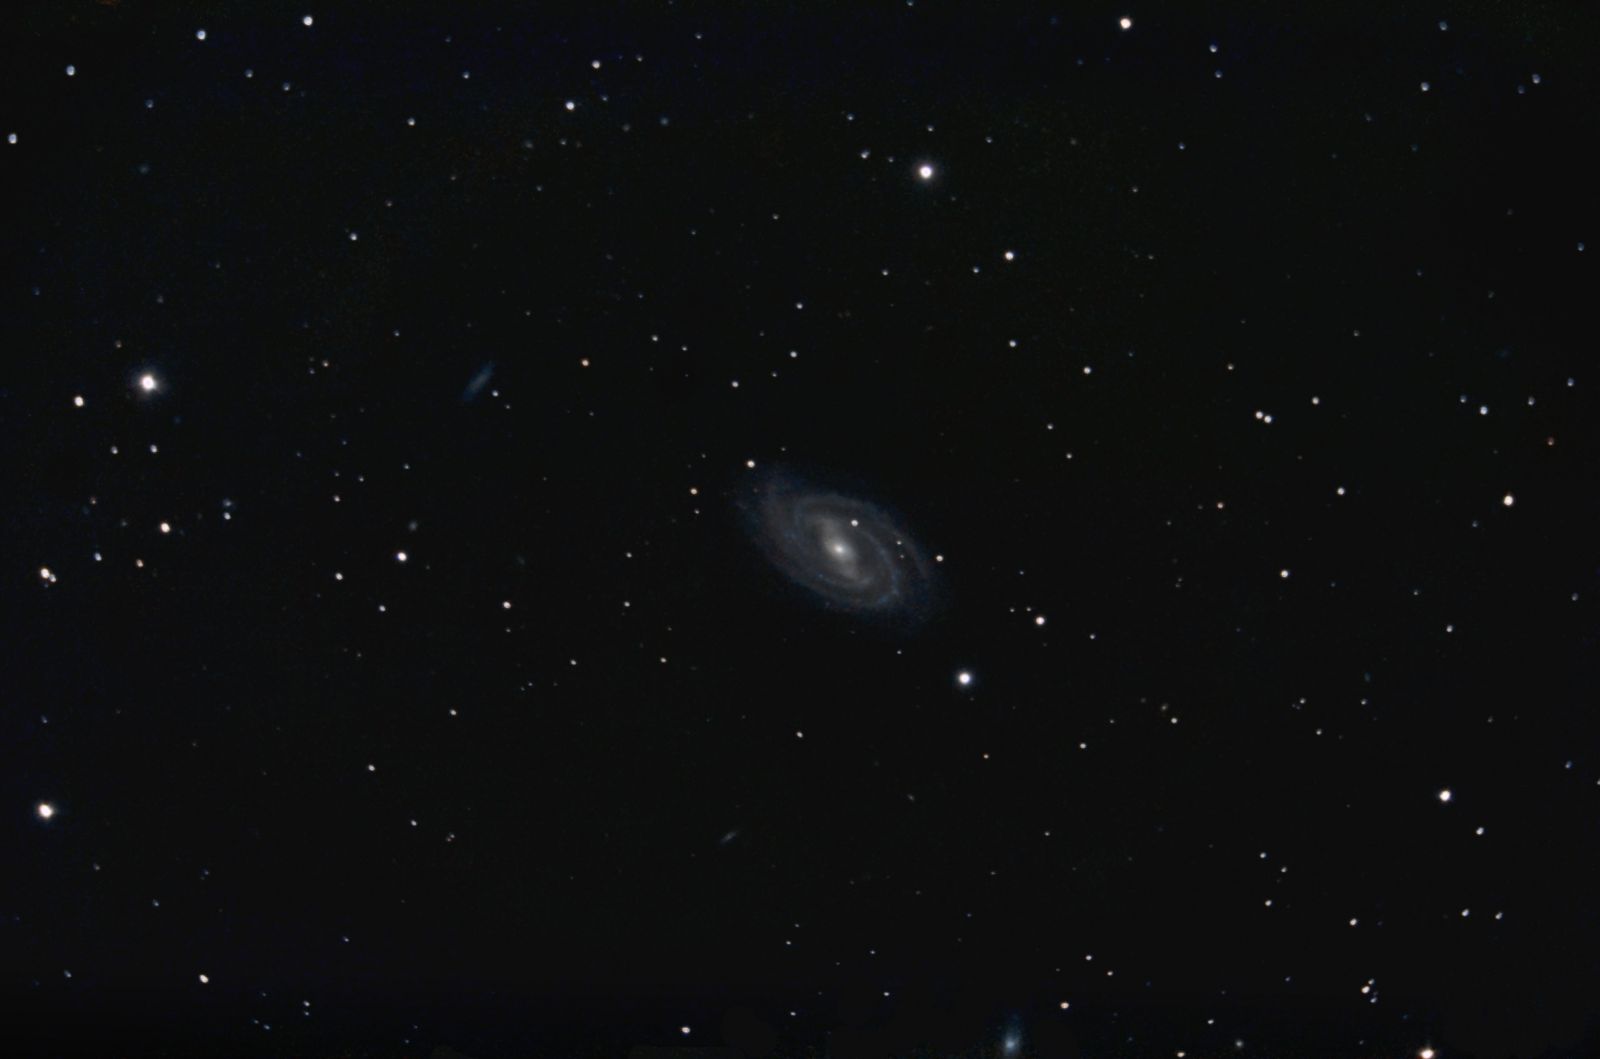 M109 Galaxy